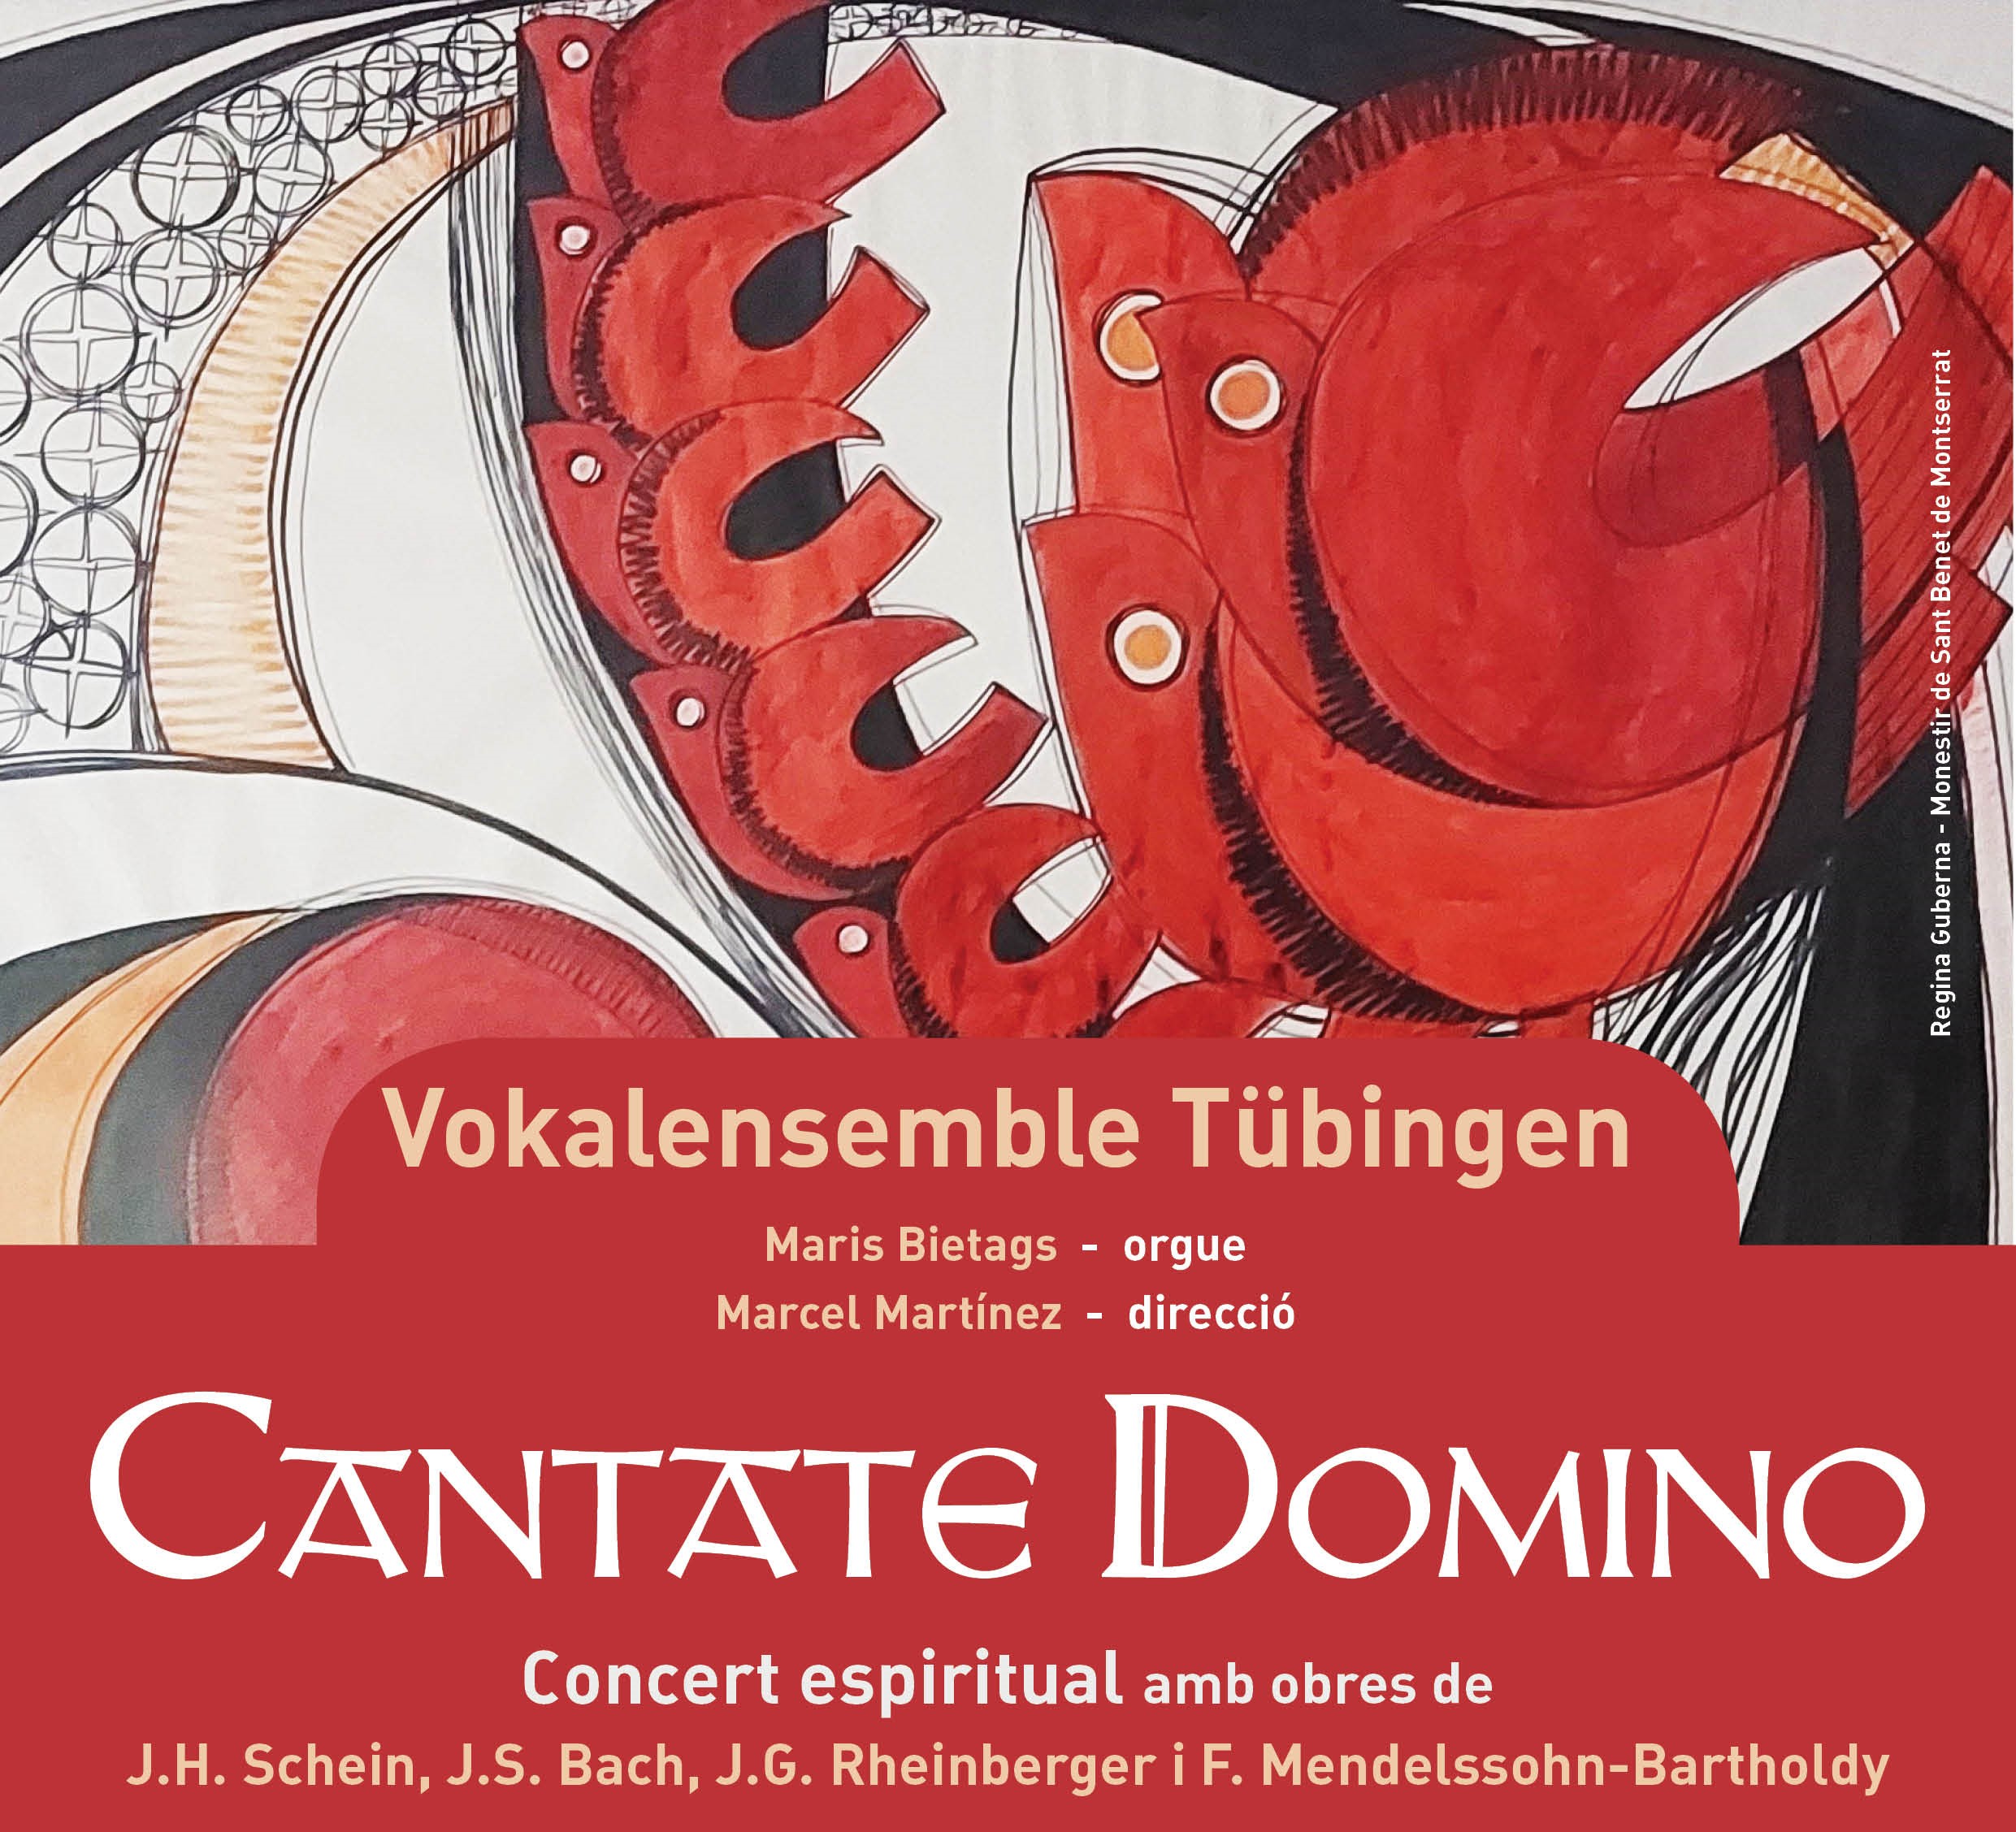 Concert de música sacra: Cantate Domino